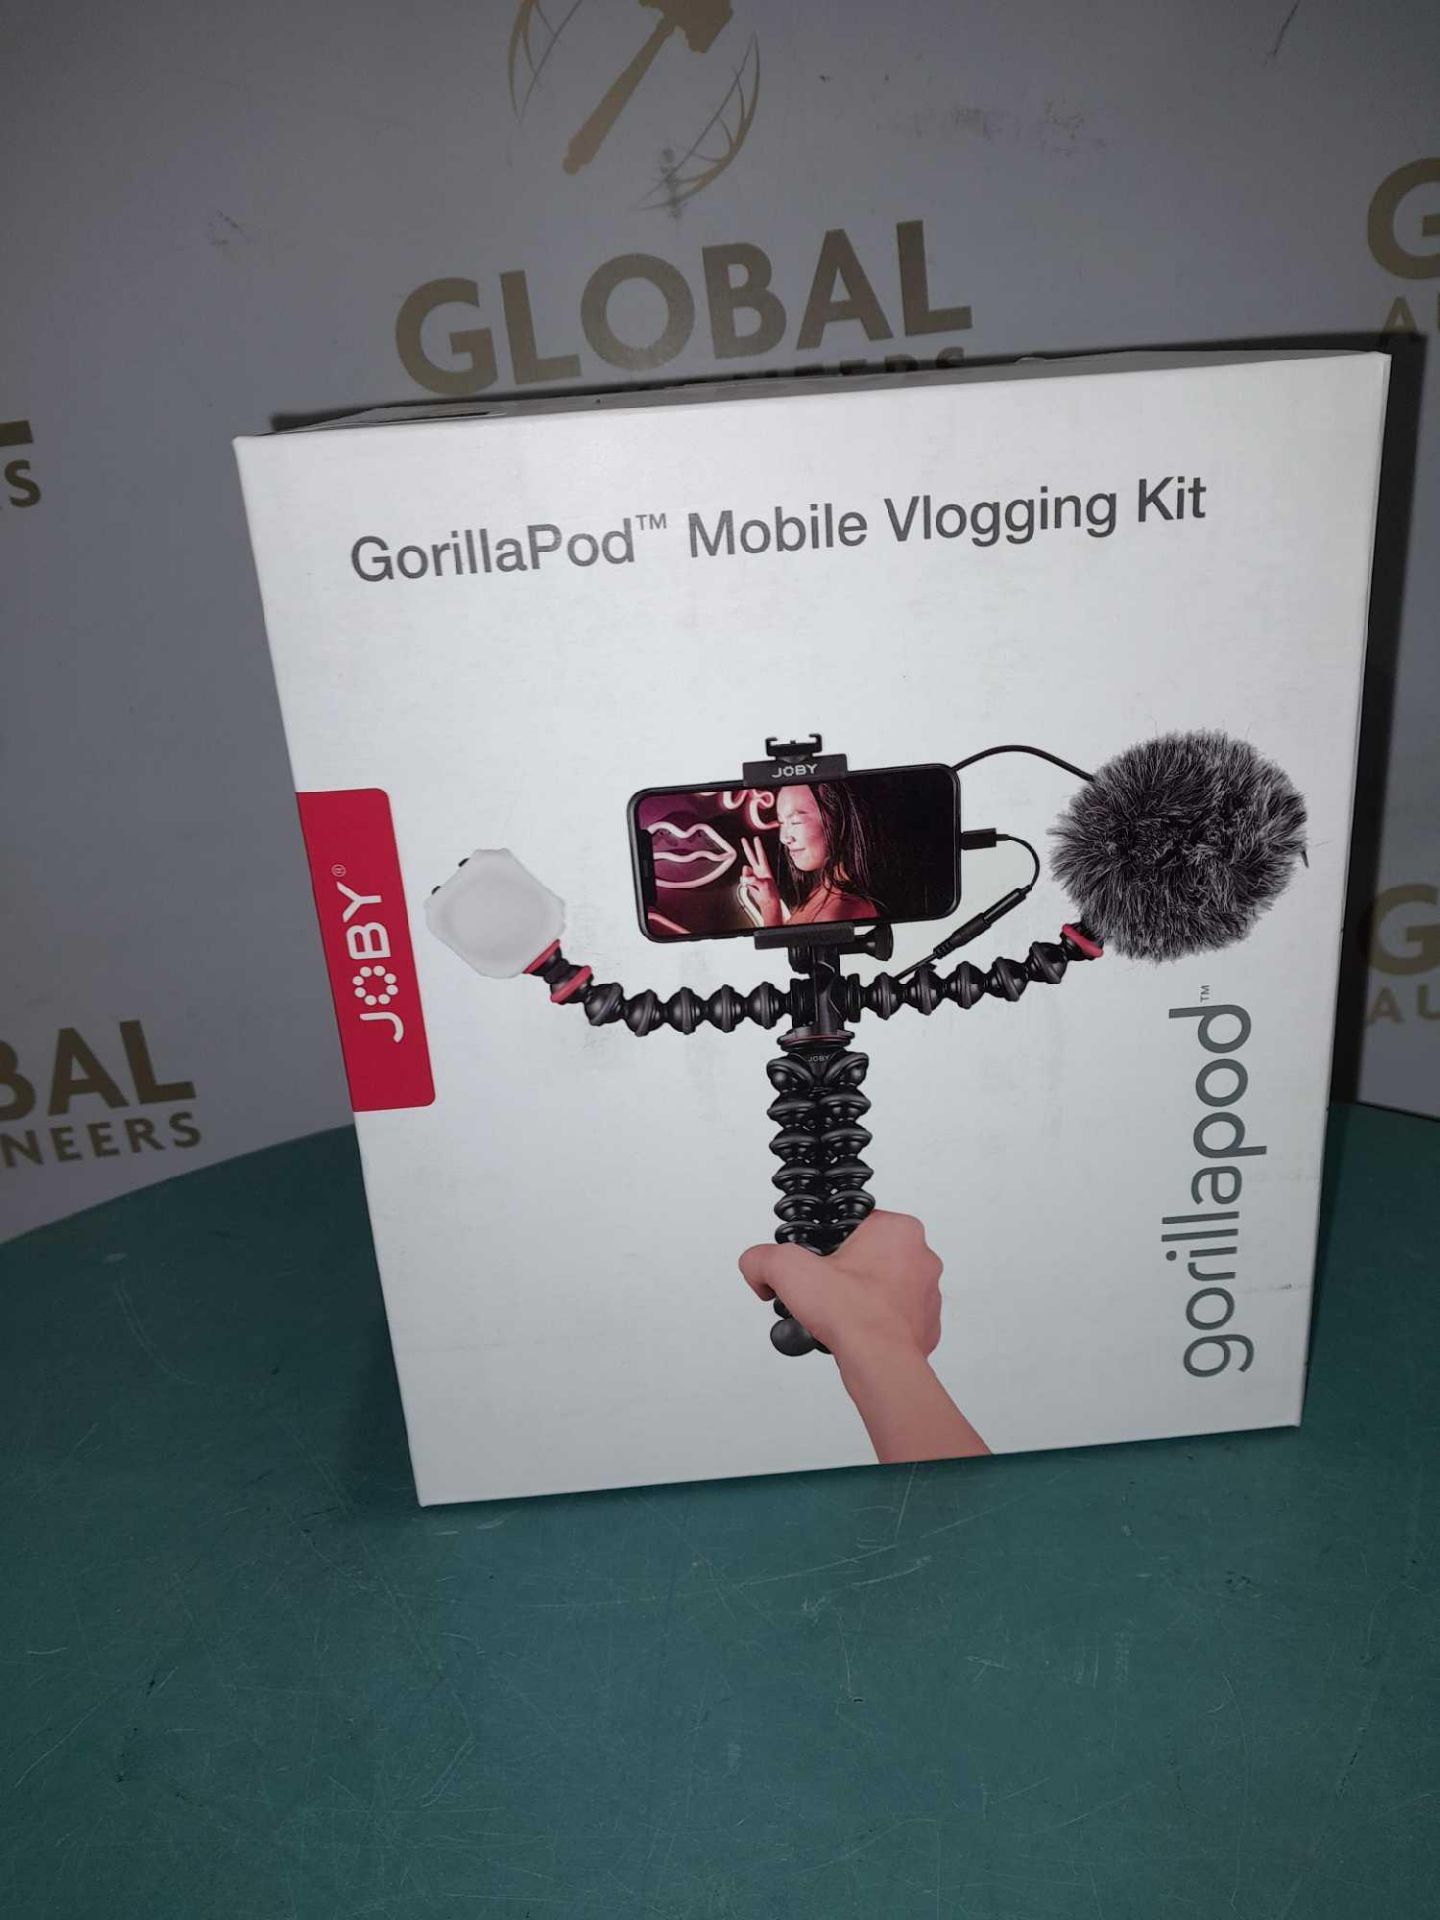 RRP £200 Boxed Joby Gorillapod Mobile Vlogging Kit - Image 2 of 2